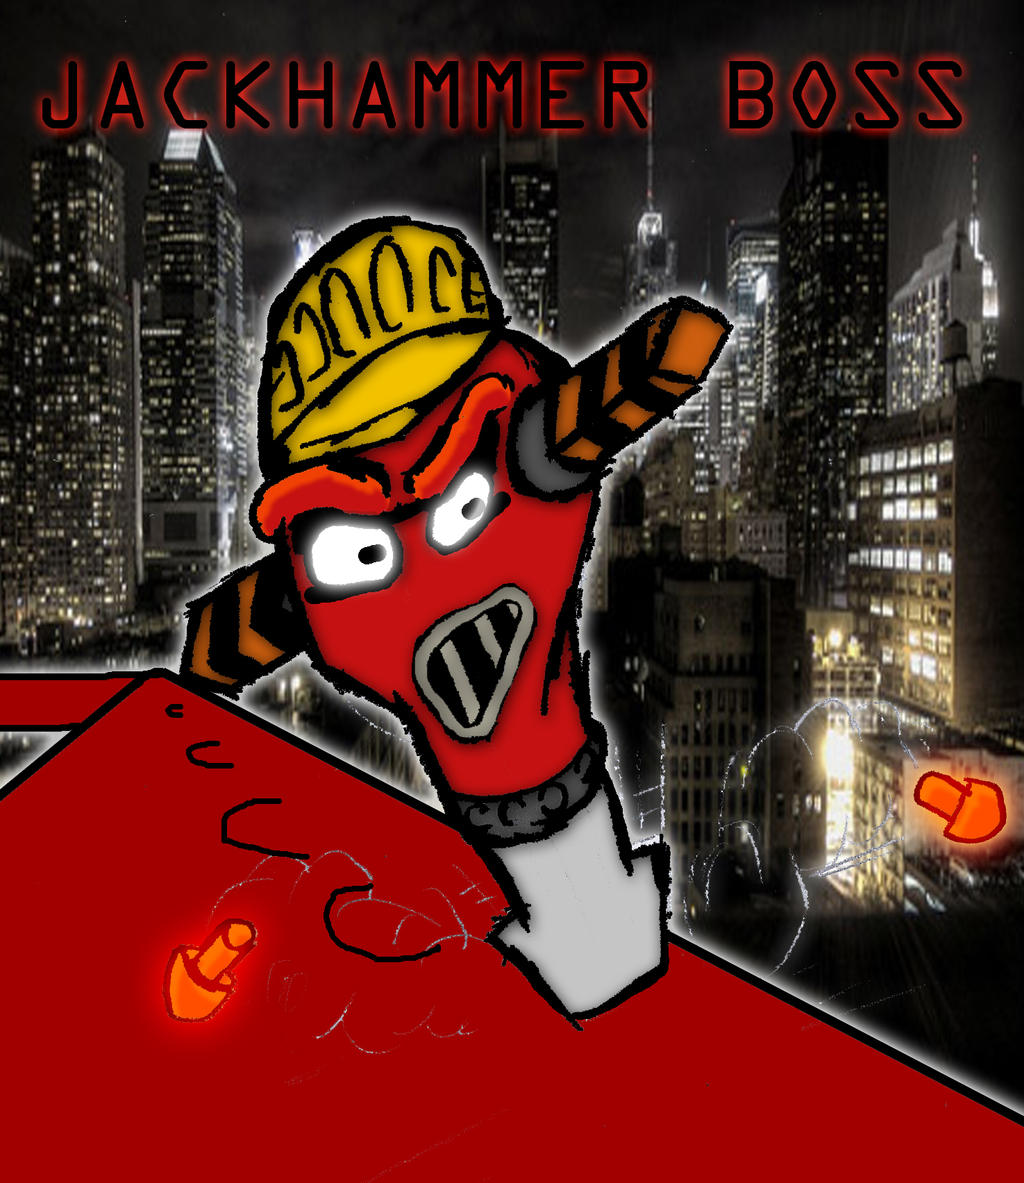 Buscar a tientas gravedad Saqueo Jackhammer Boss (Toy Story 2 Video Game) by Crisis-Comics on DeviantArt